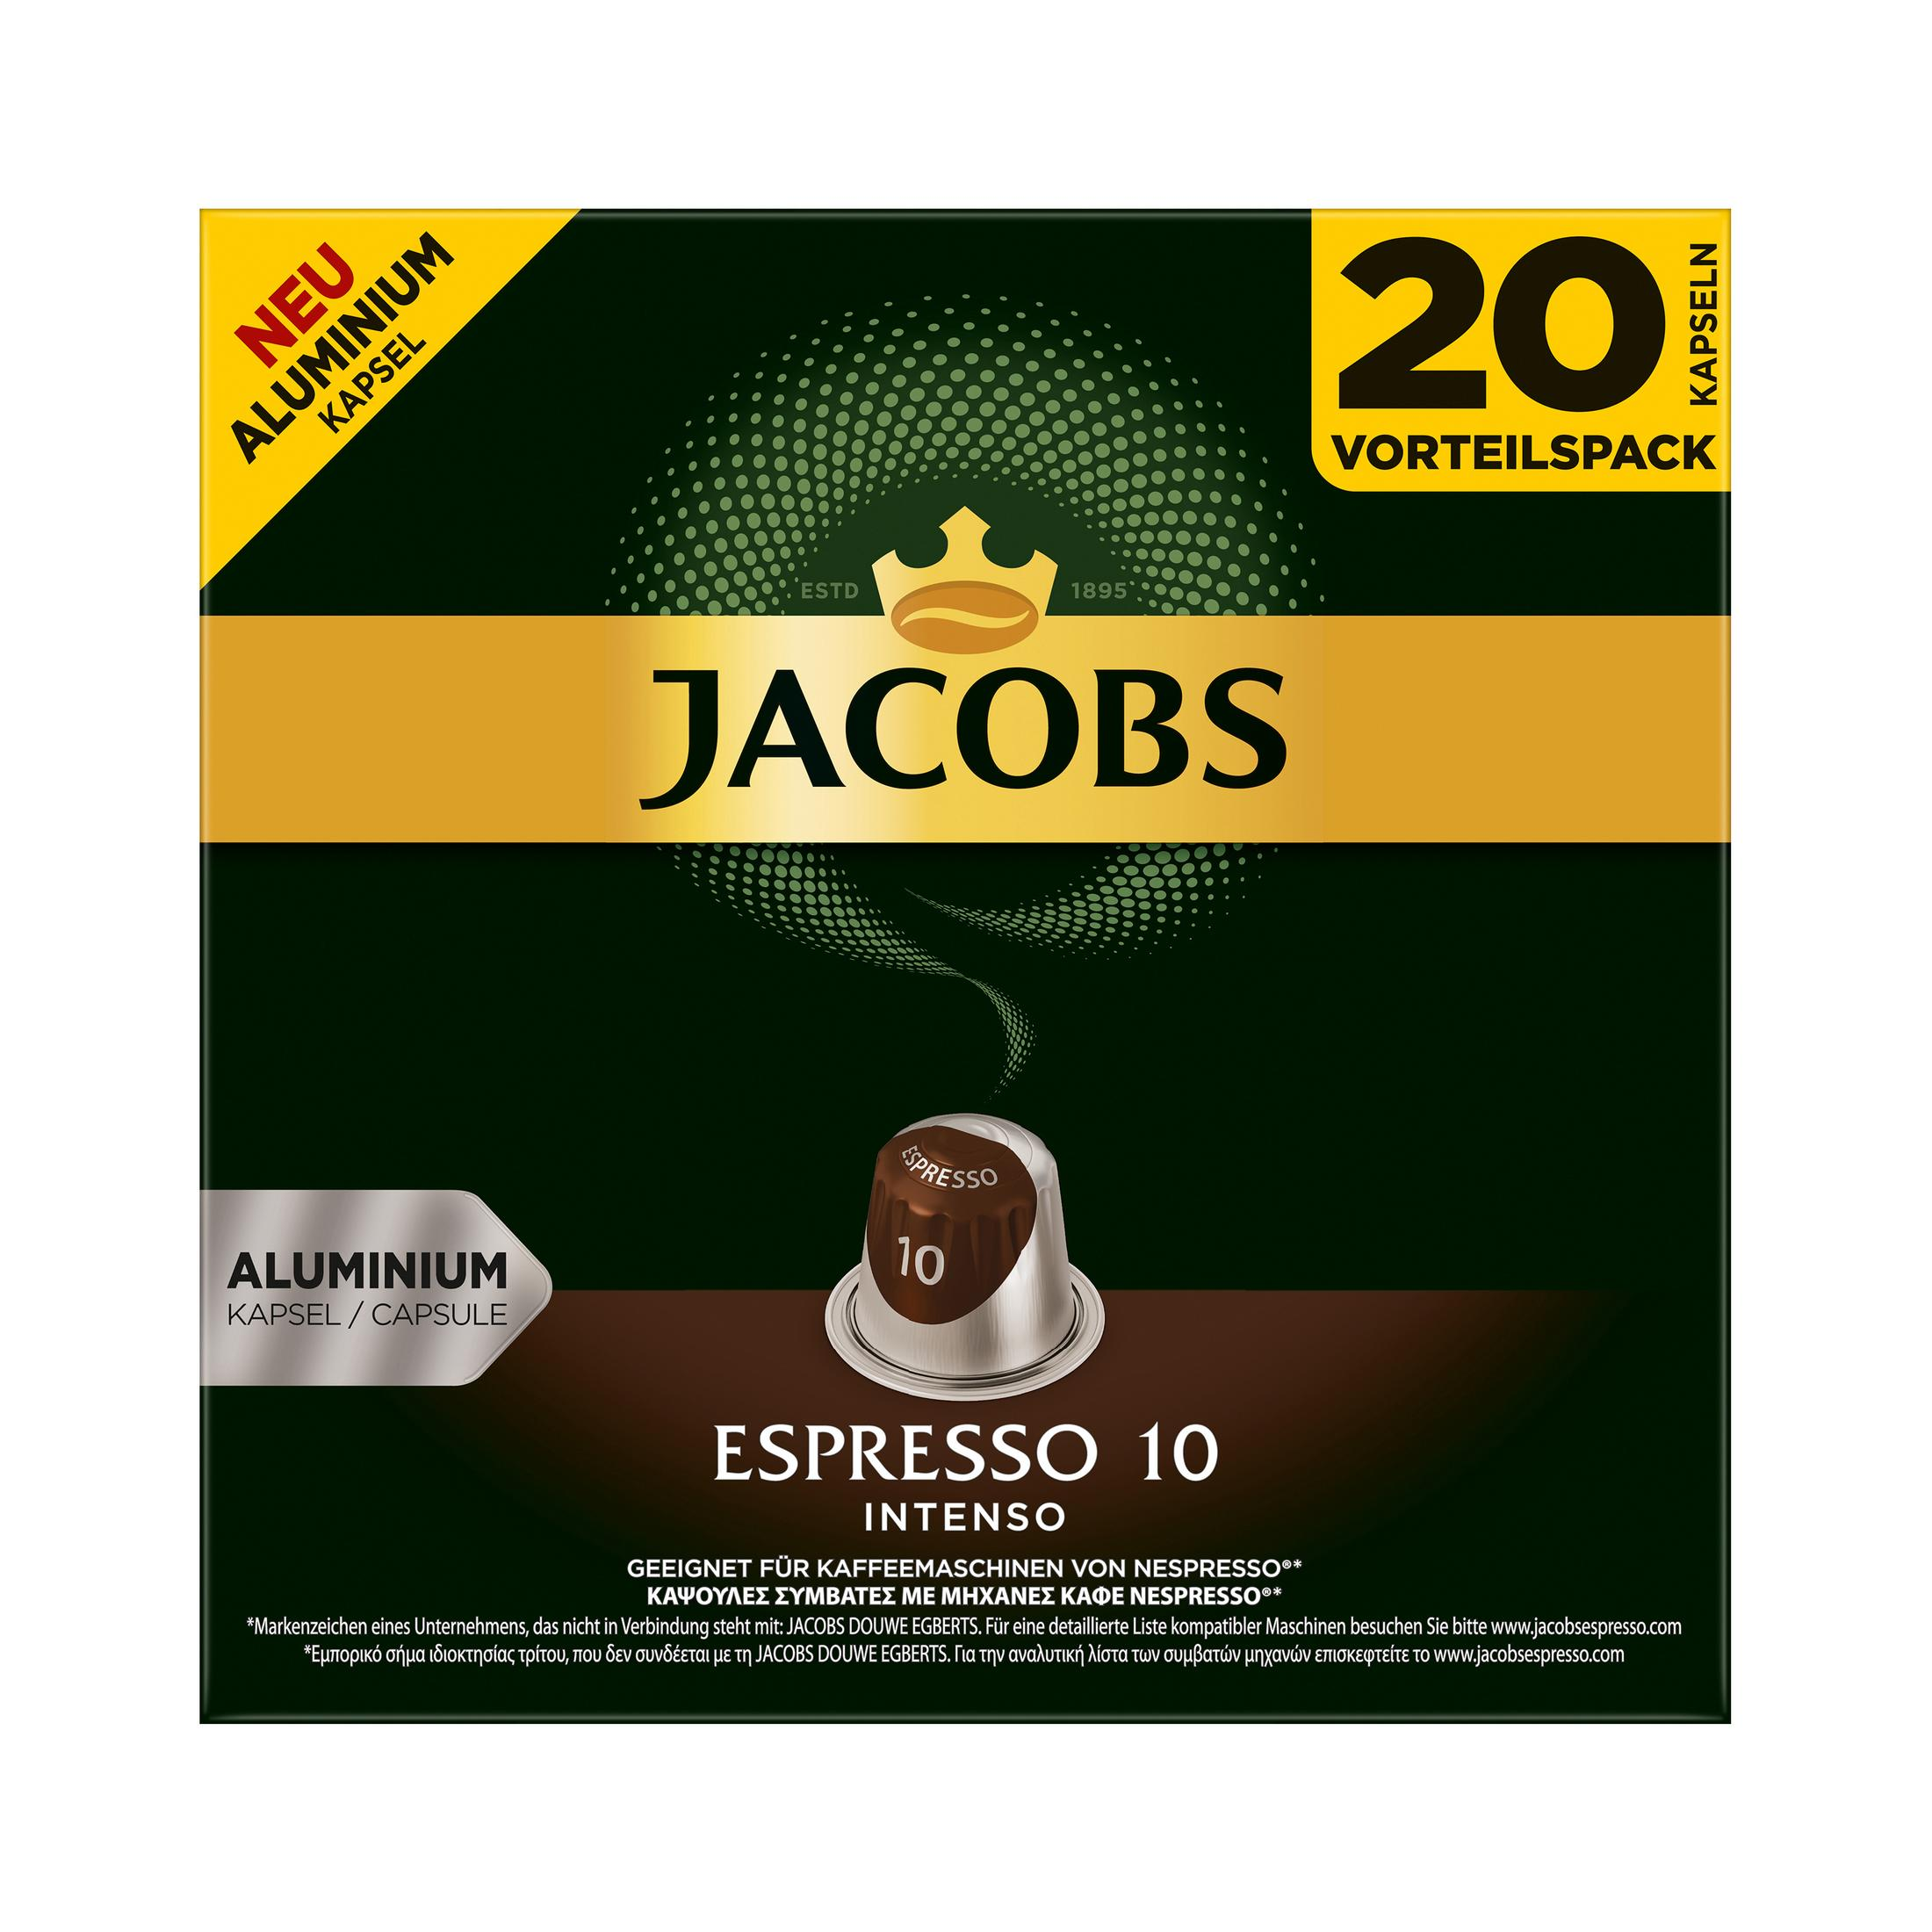 INTENSO Kaffeekapseln 20ER 10 4057019 ESPRESSO JACOBS (Nespresso)